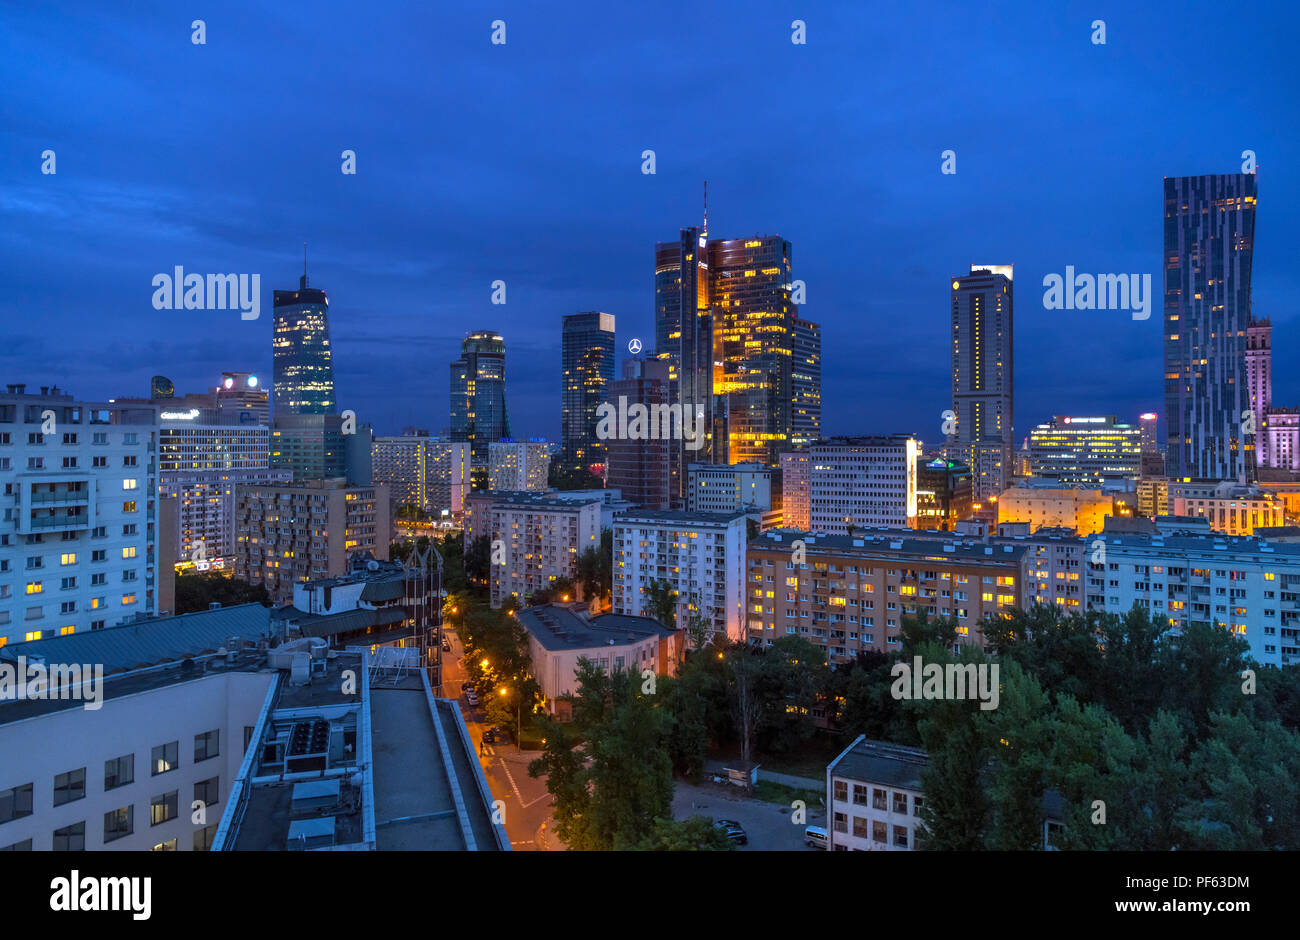 Downtown skyline at night, Warsaw, Poland Stock Photo